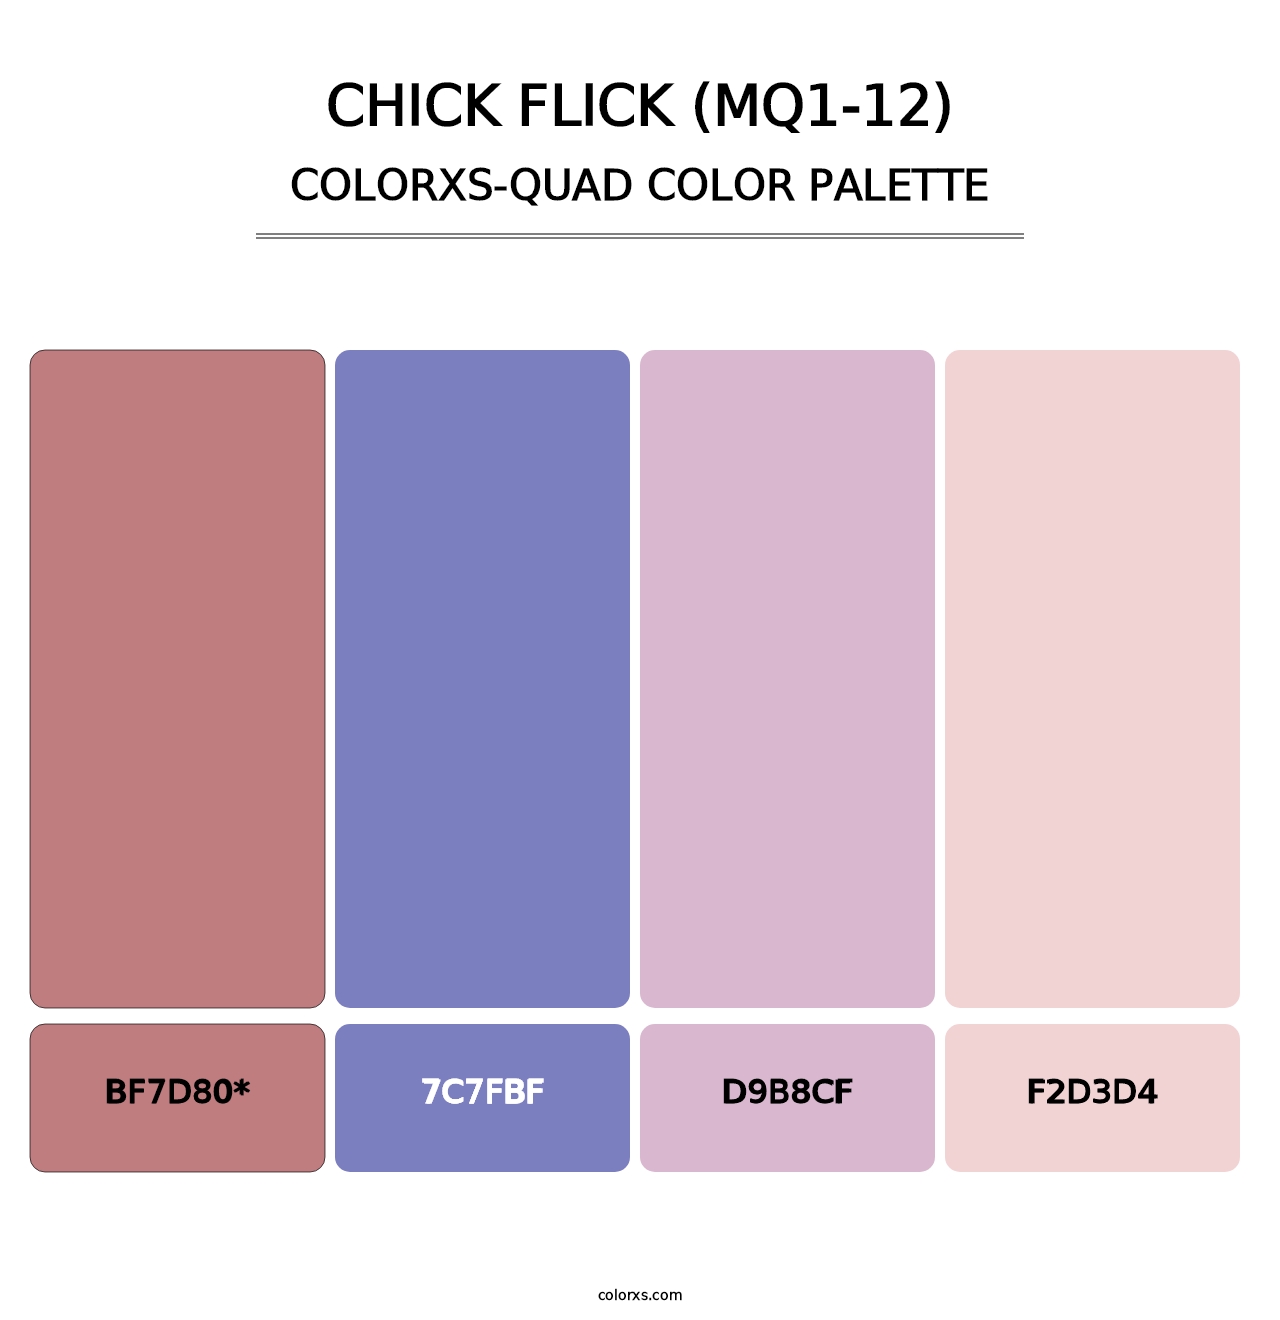 Chick Flick (MQ1-12) - Colorxs Quad Palette